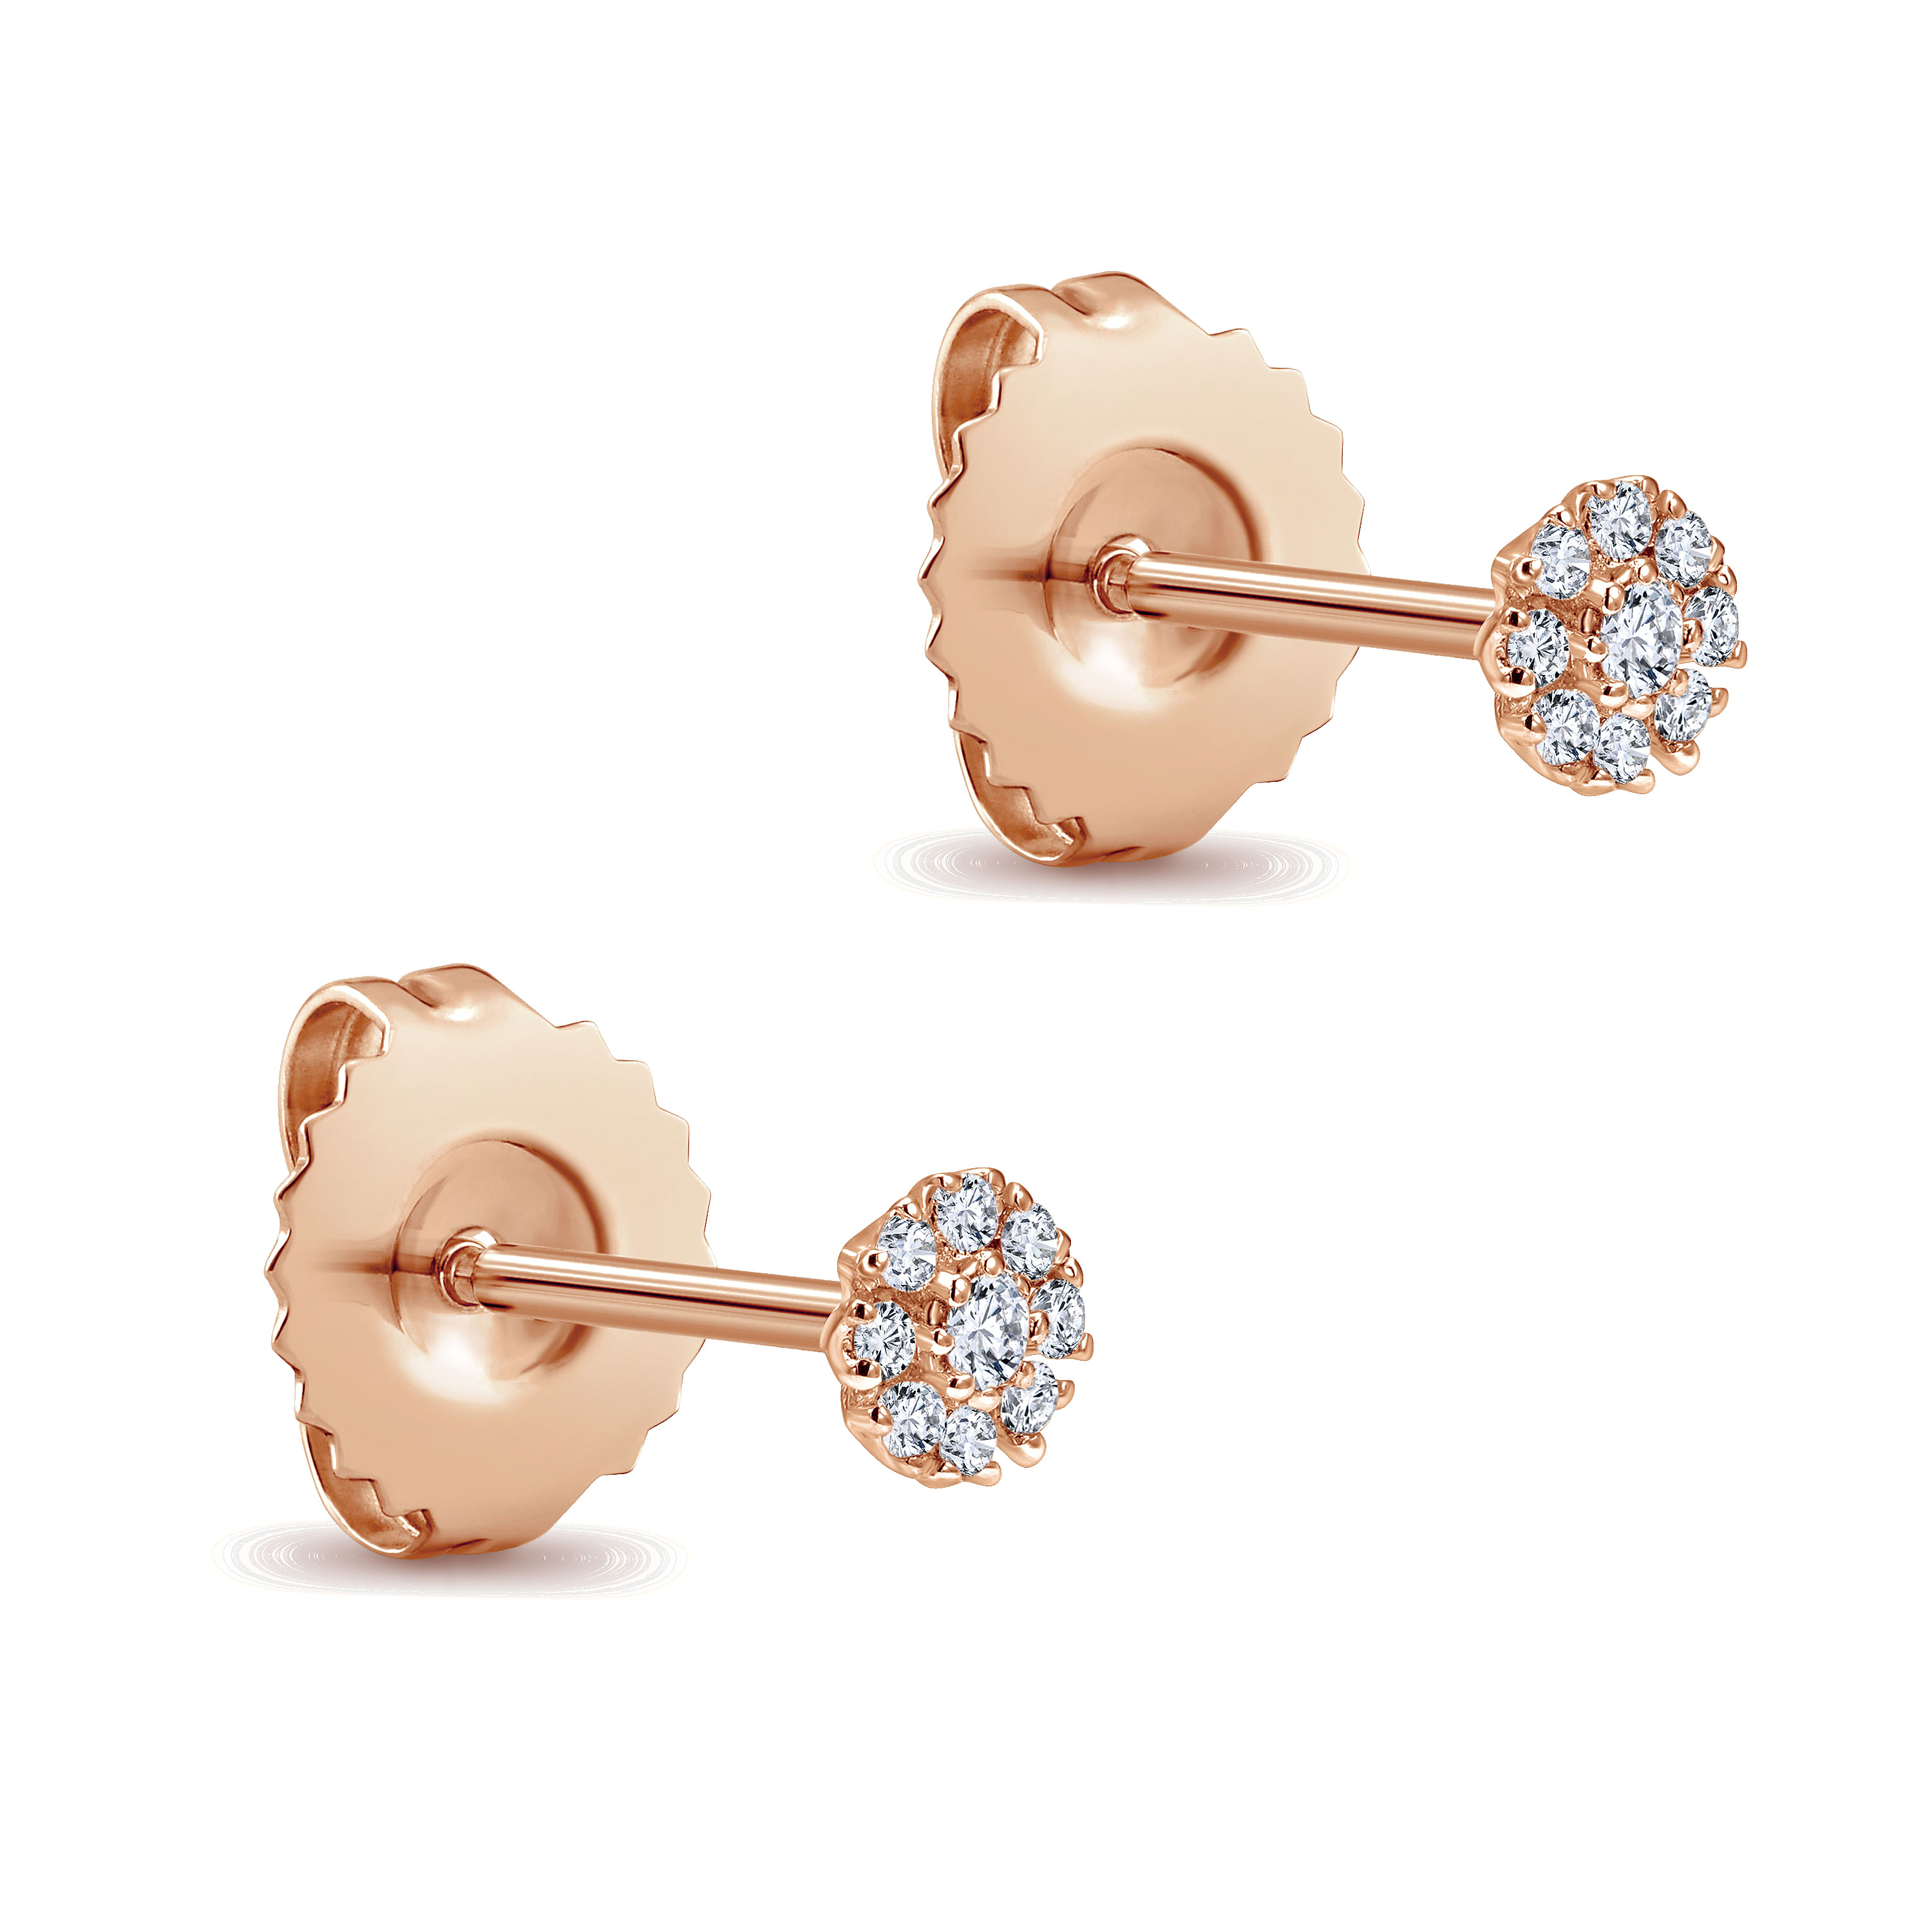 14K Rose Gold Floral Round Diamond Stud Earrings